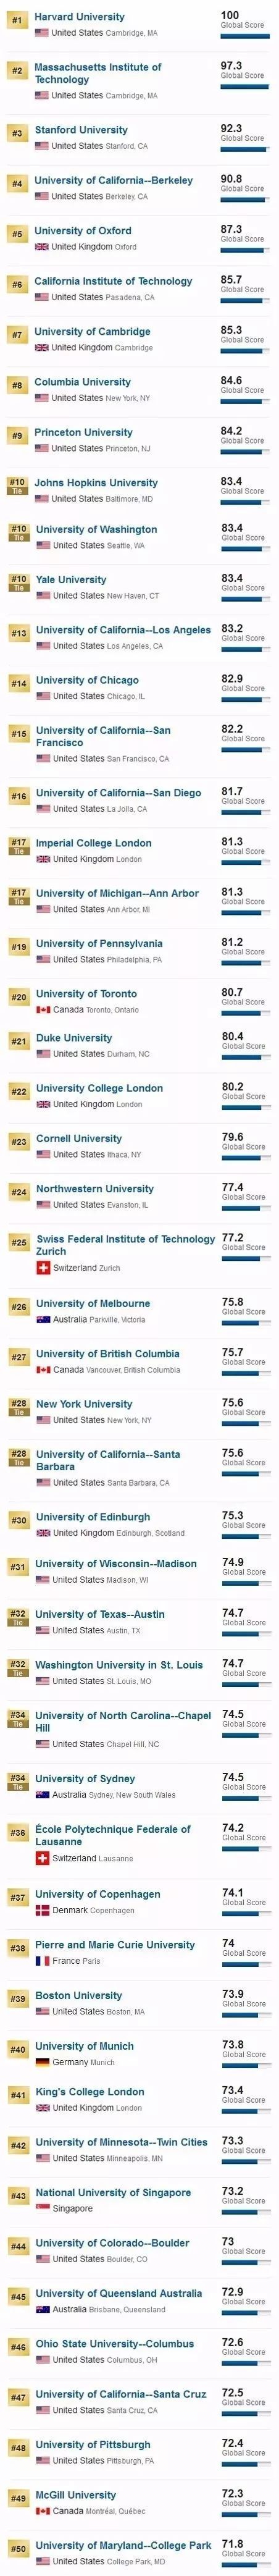 2018USNews世界大学排行榜